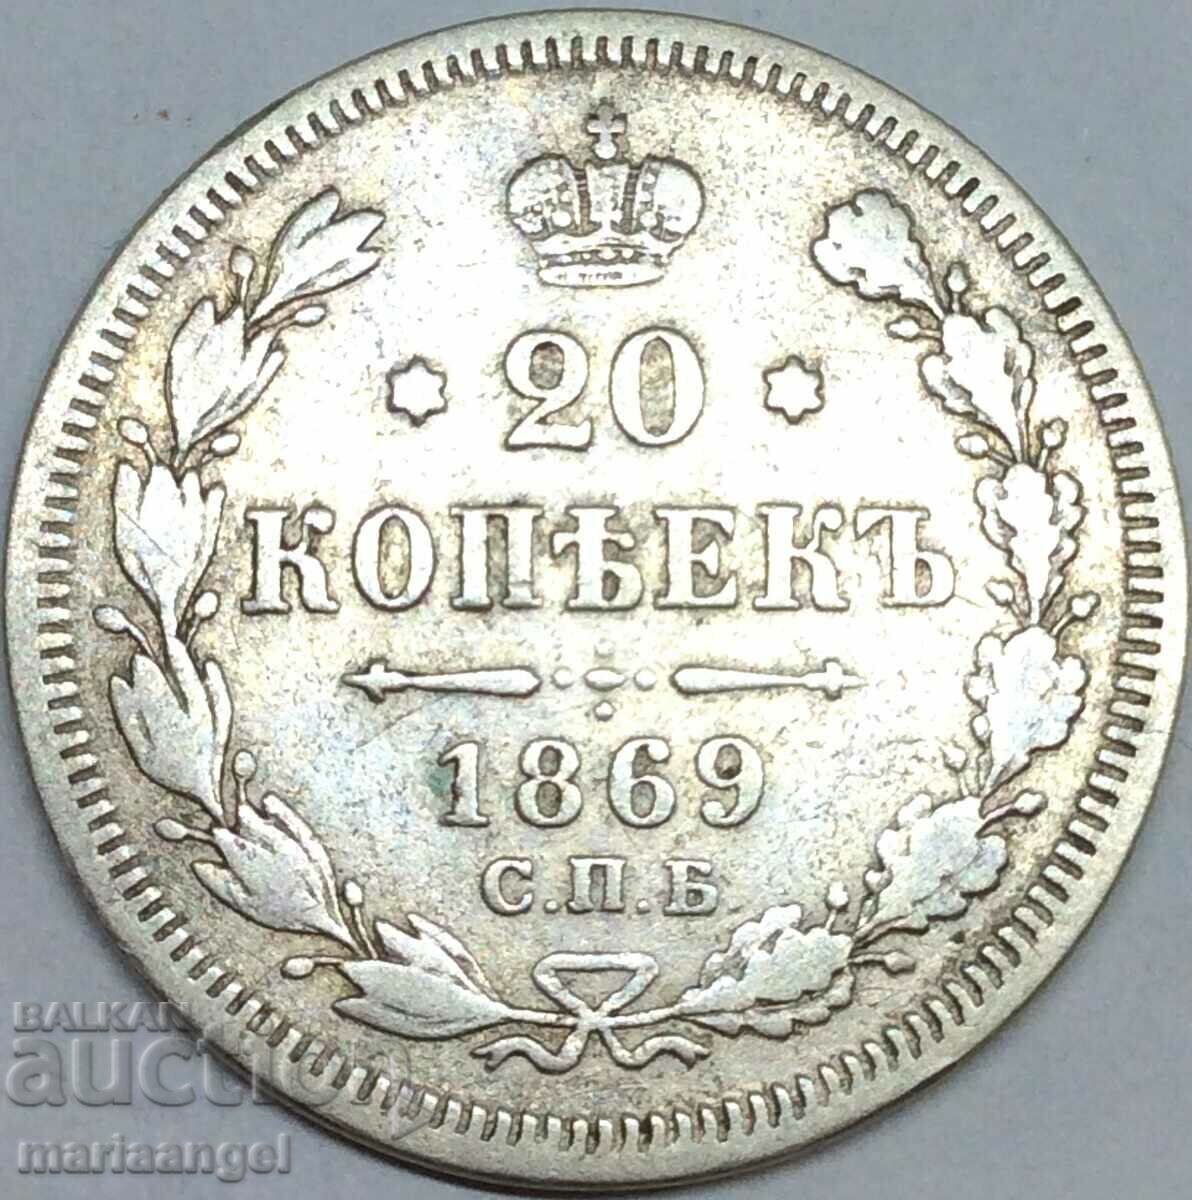 20 kopecks 1869 Russia Alexander III (1855-1894) silver